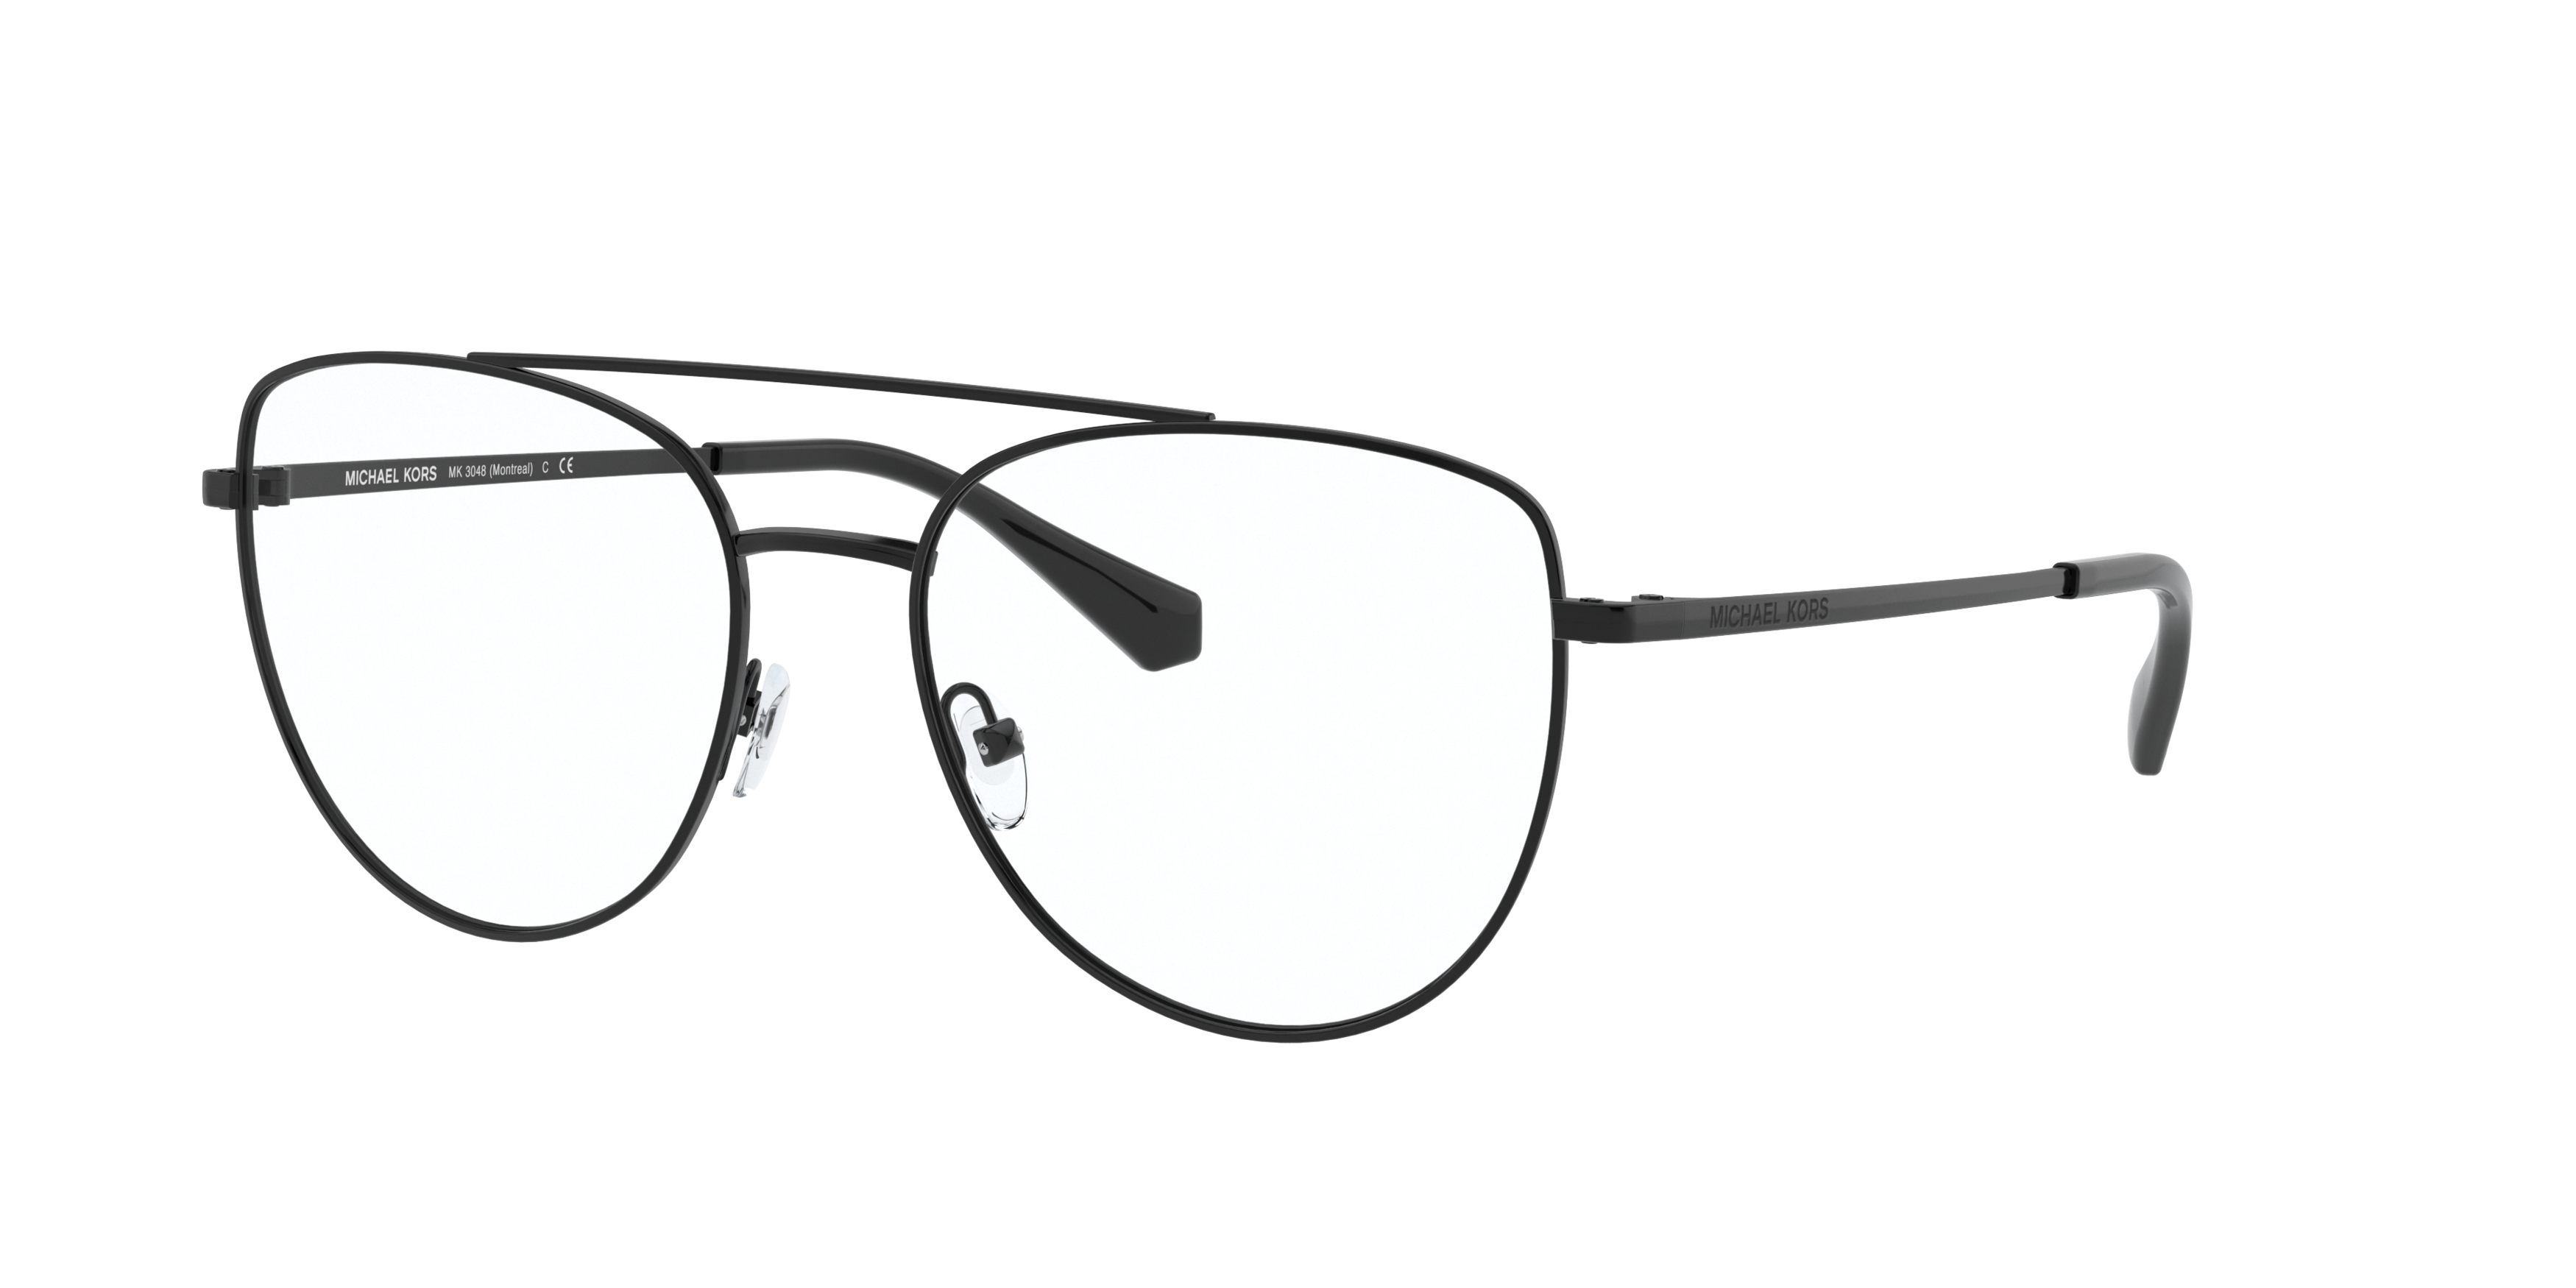 Angle_Left01 Michael Kors MK 3048 Glasses Transparent / Brown